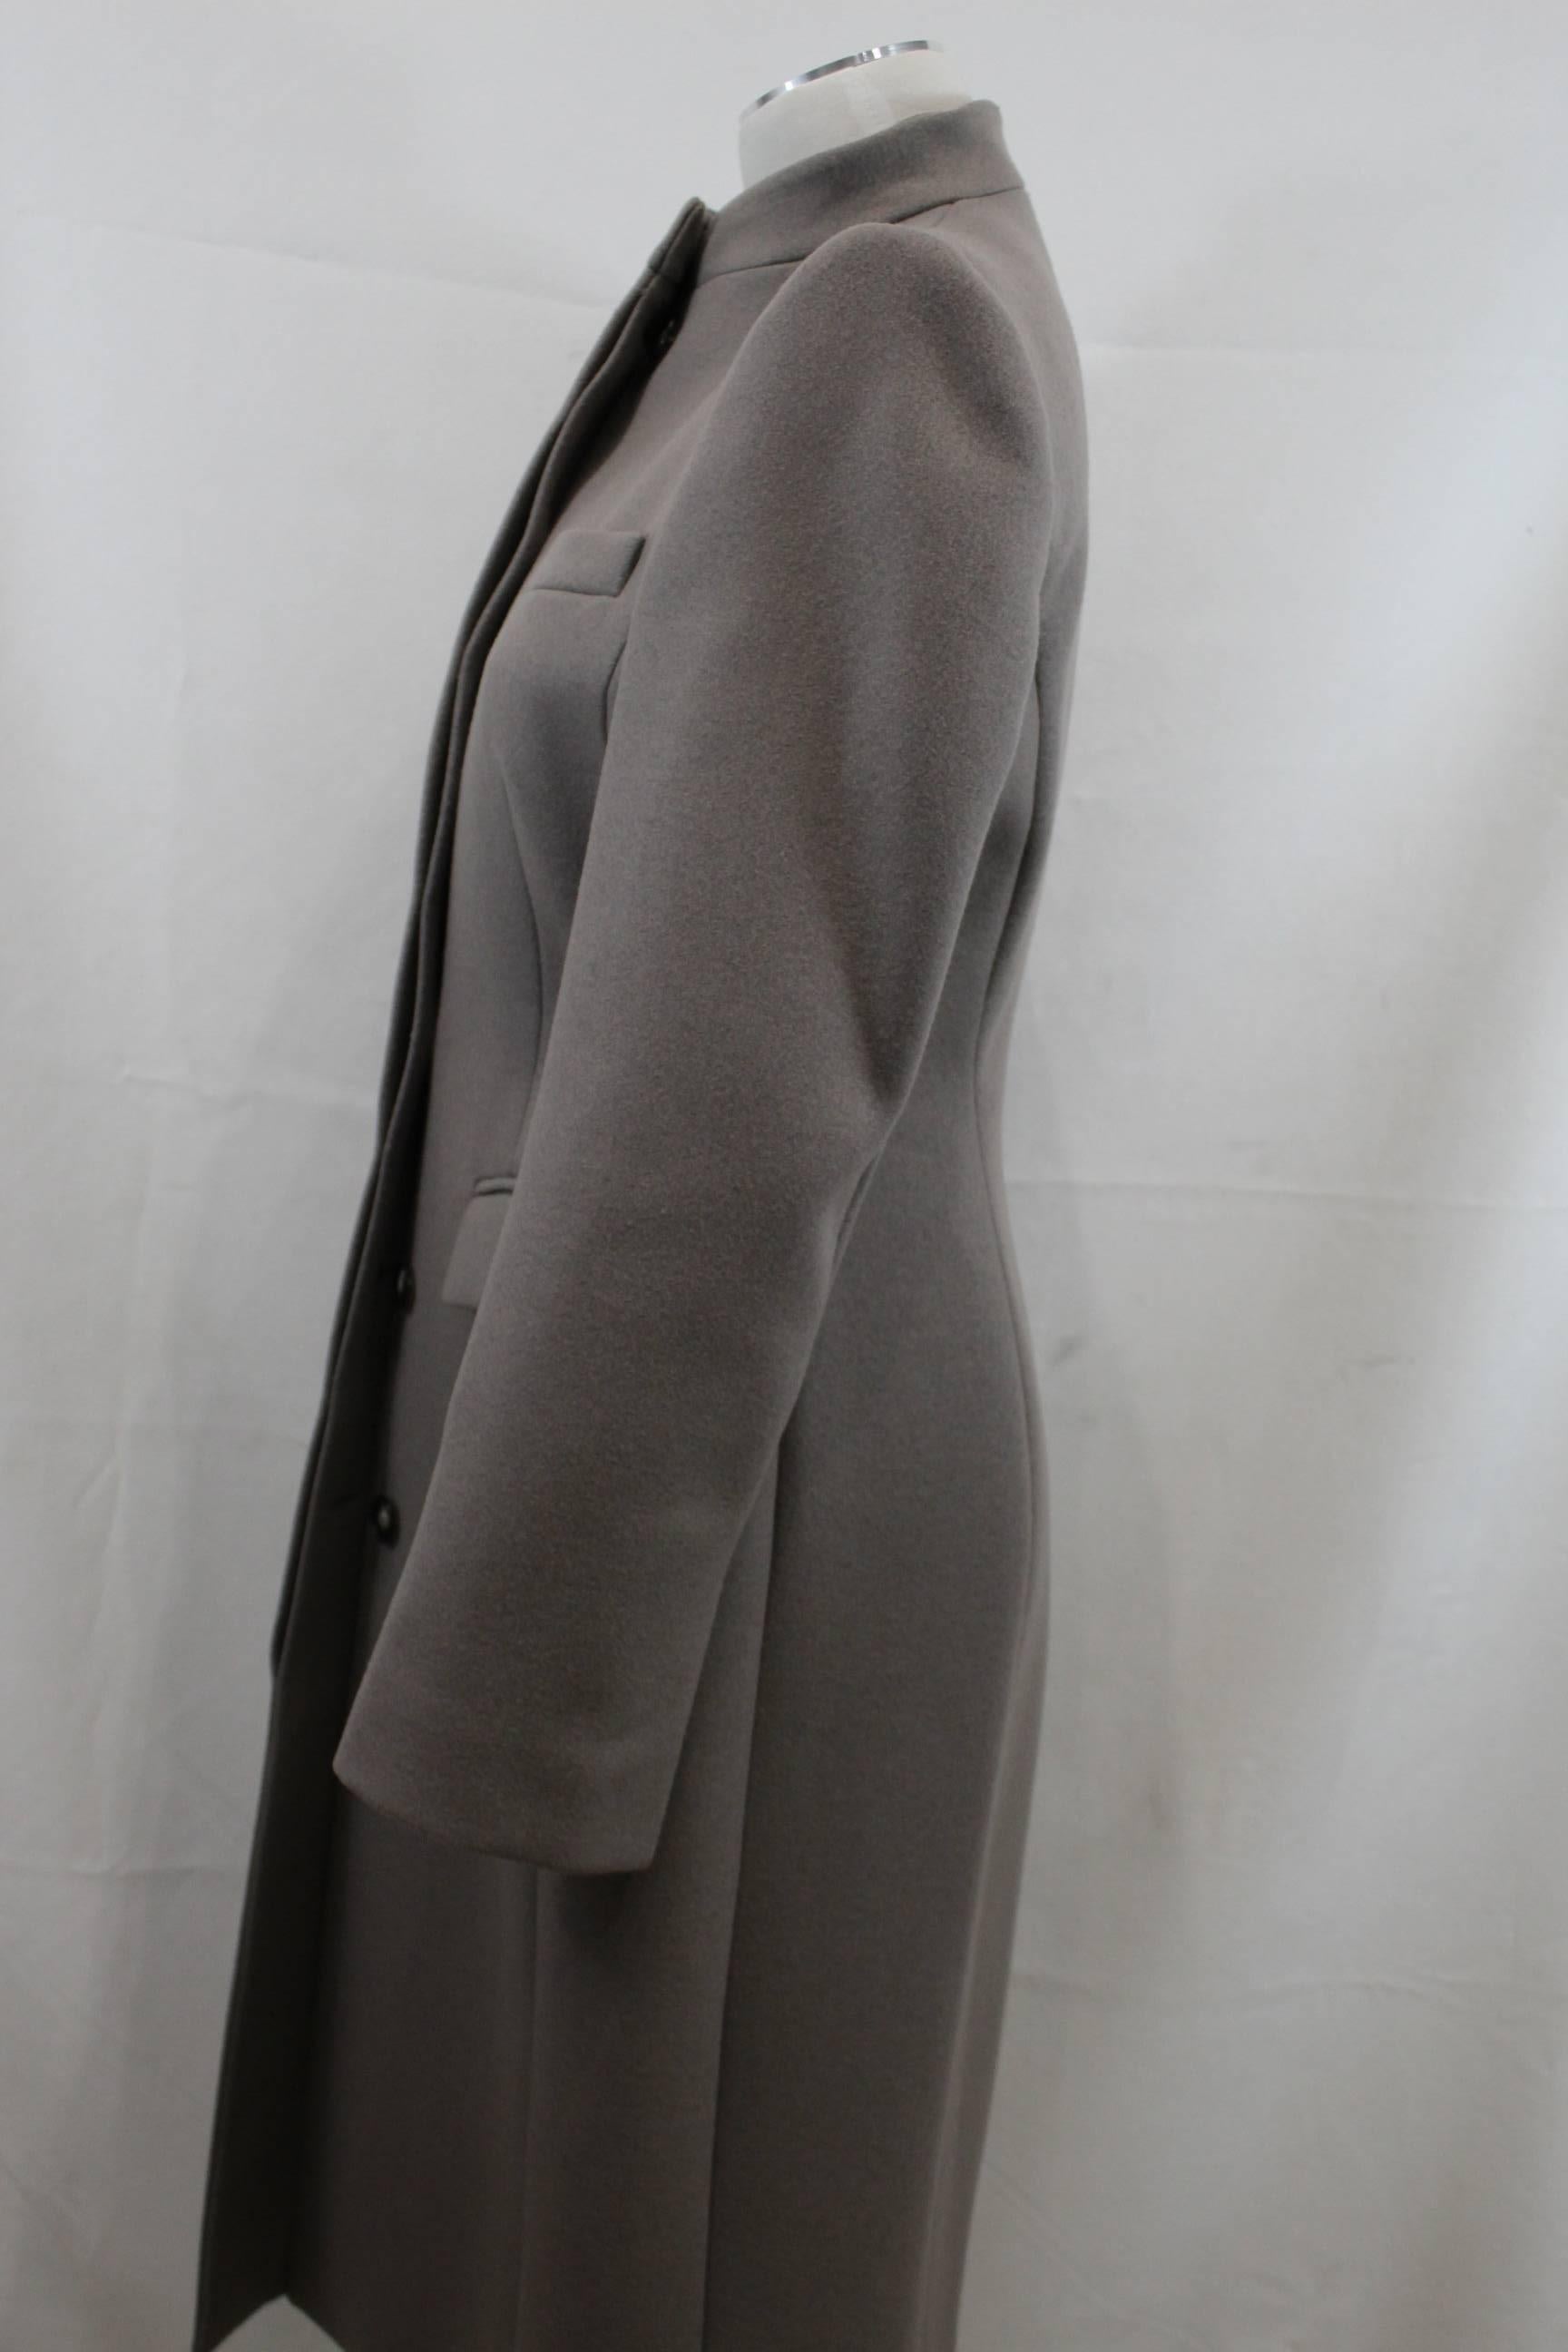 Black Stella McCartney Nice Wool Coat. New never used. Retail Price 1800$